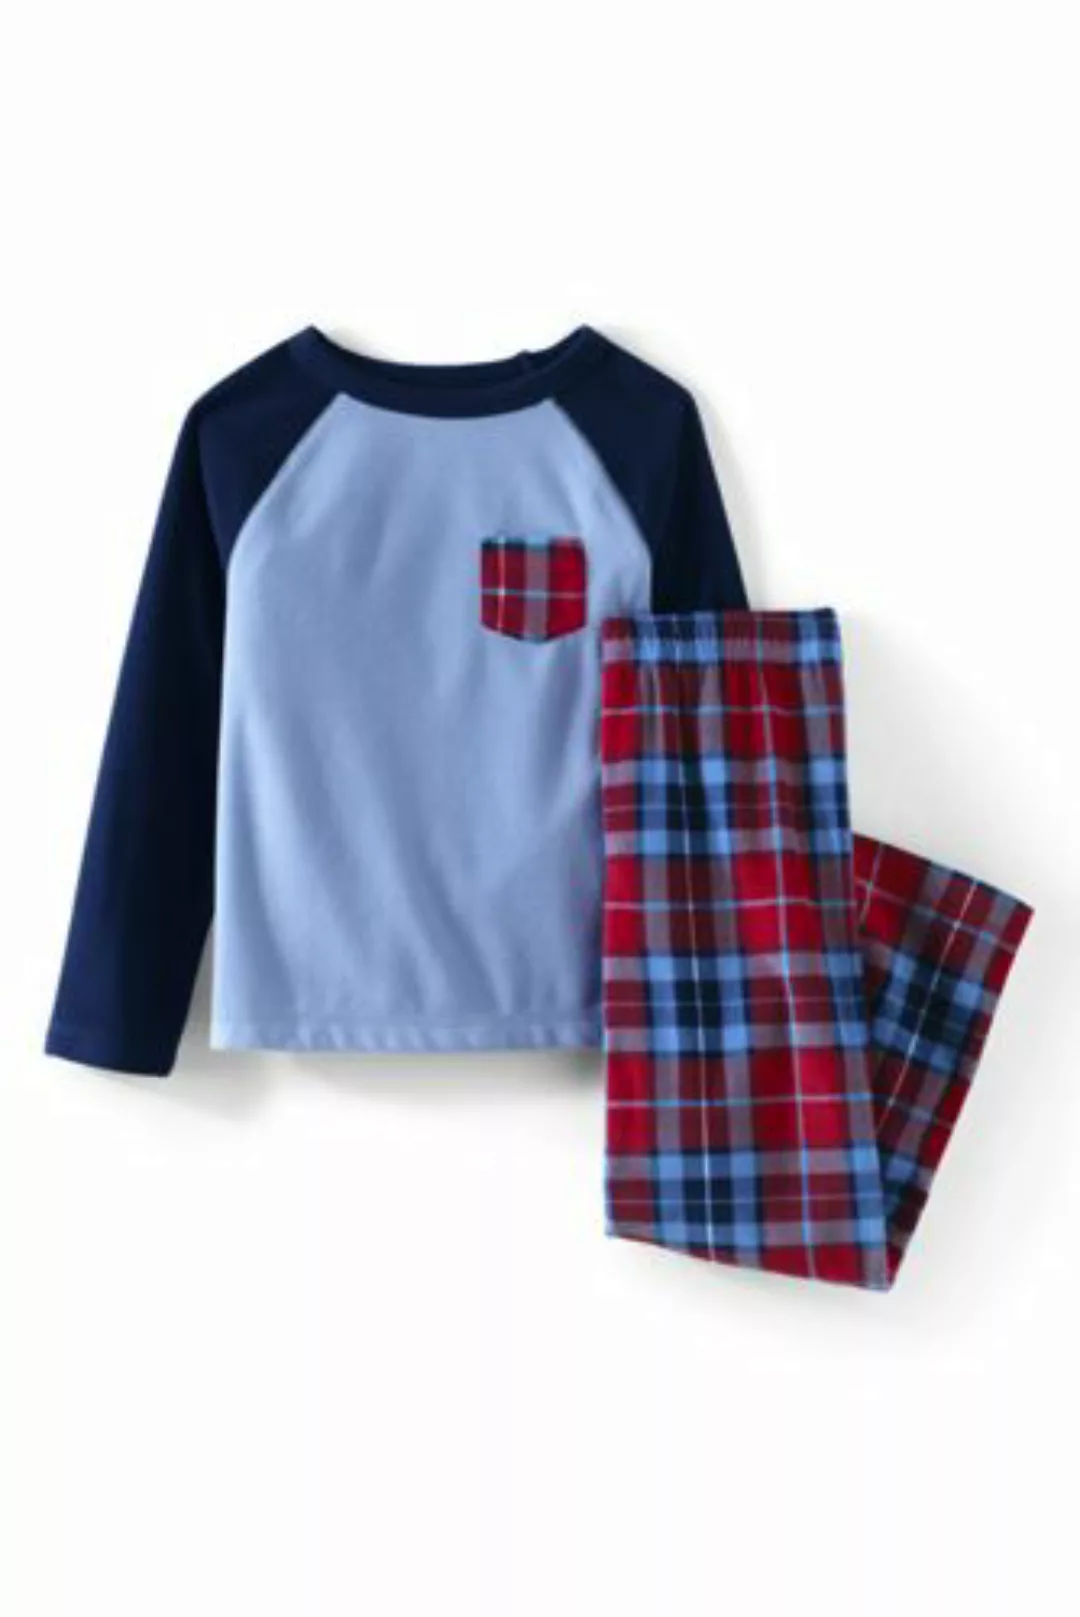 Pyjama-Set aus Fleece, Größe: 98/104, Rot, by Lands' End, Satt Rot Multi Ka günstig online kaufen